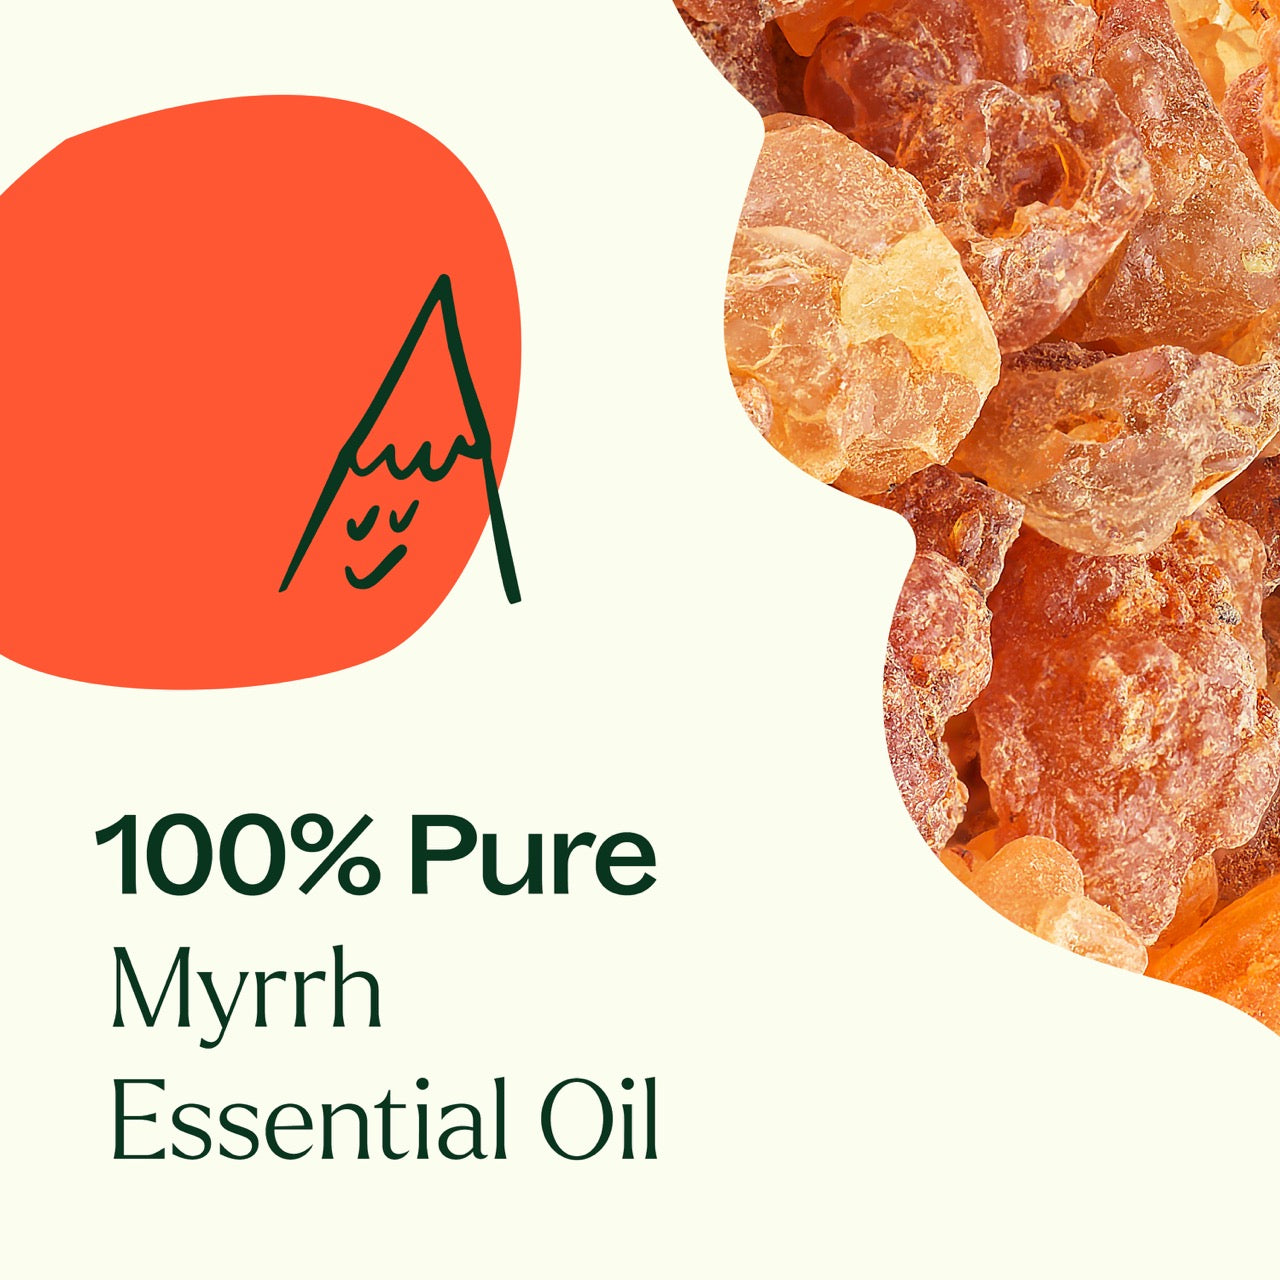 100% pure Myrrh Essential Oil